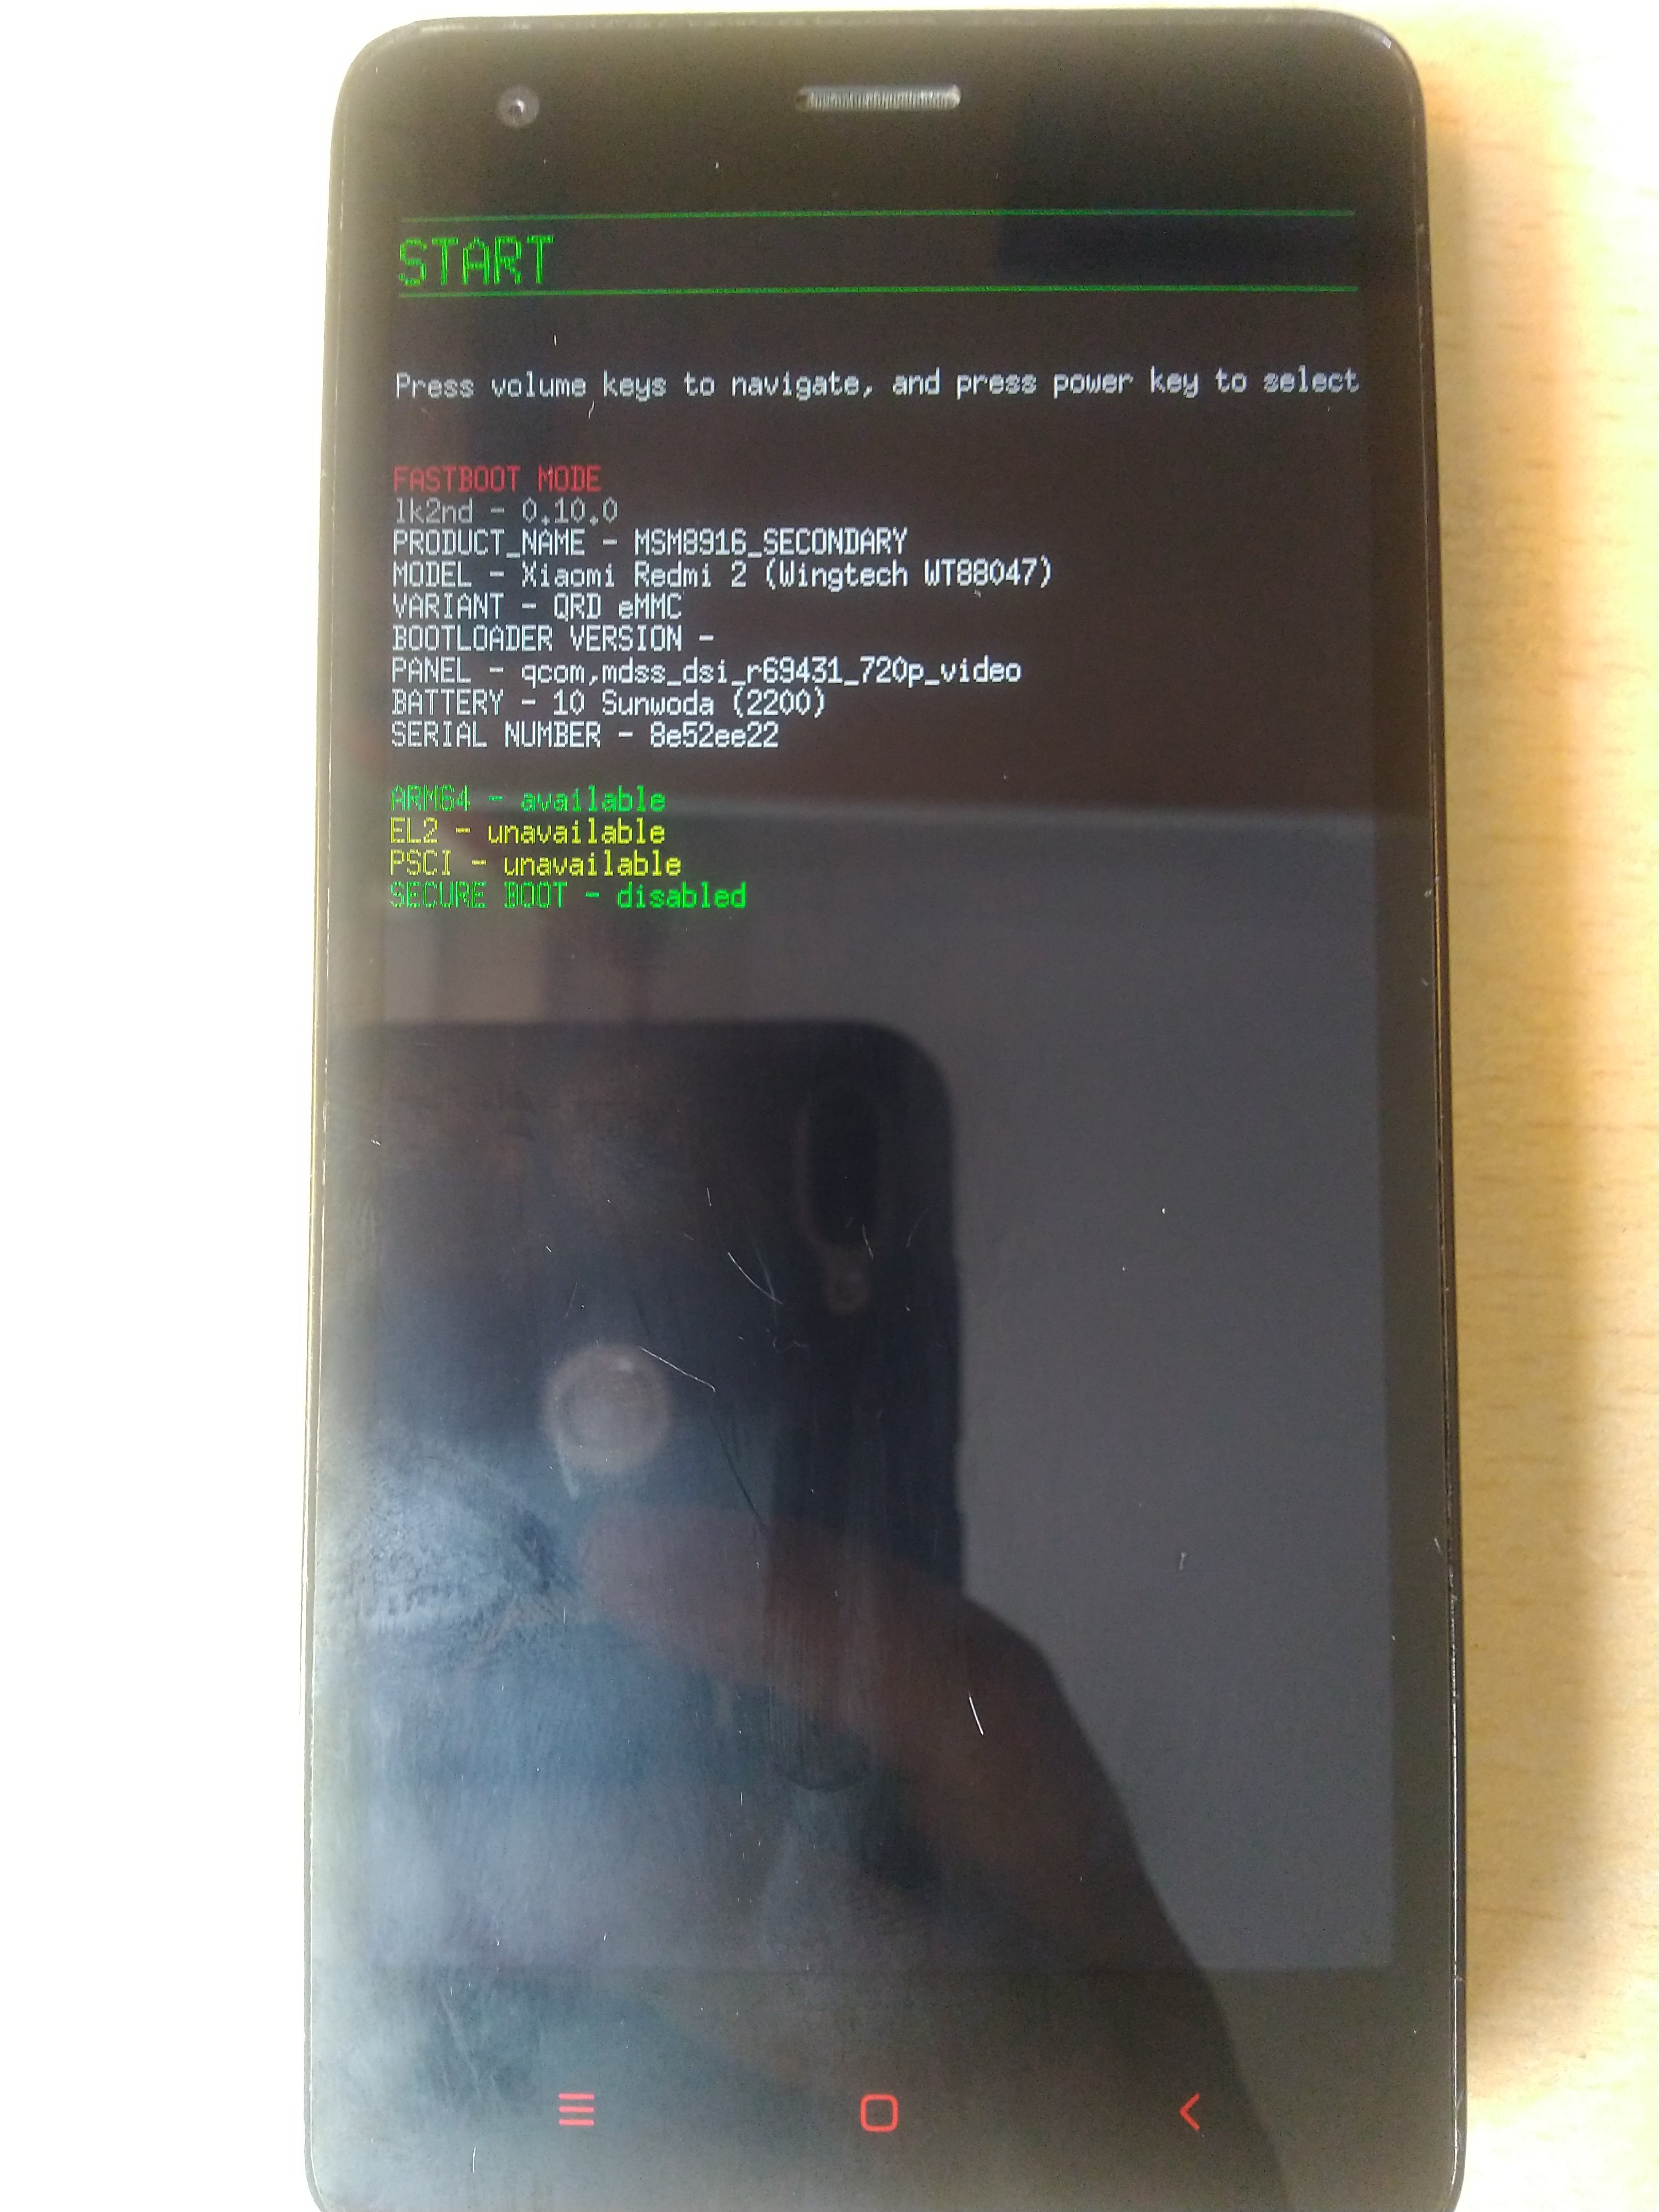 postmarketOS Phosh Xiaomi Redmi 2 ProT wt86047 wt88047 kernel 5.15.0 aarch64